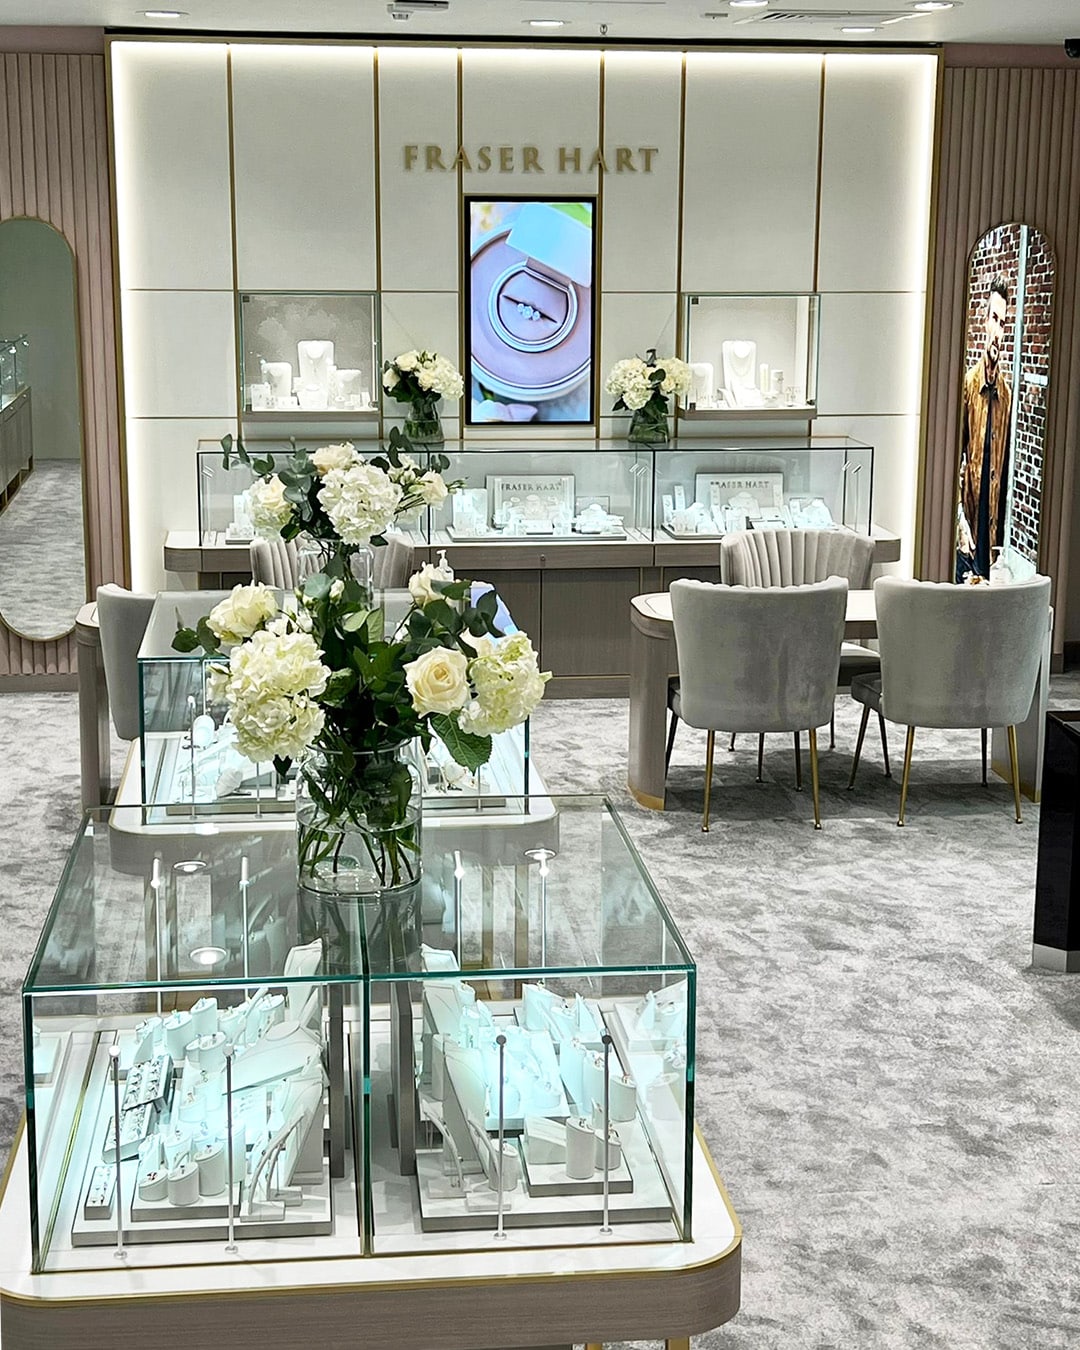 fraser hart luxury jewellry shopfitting high quality interior